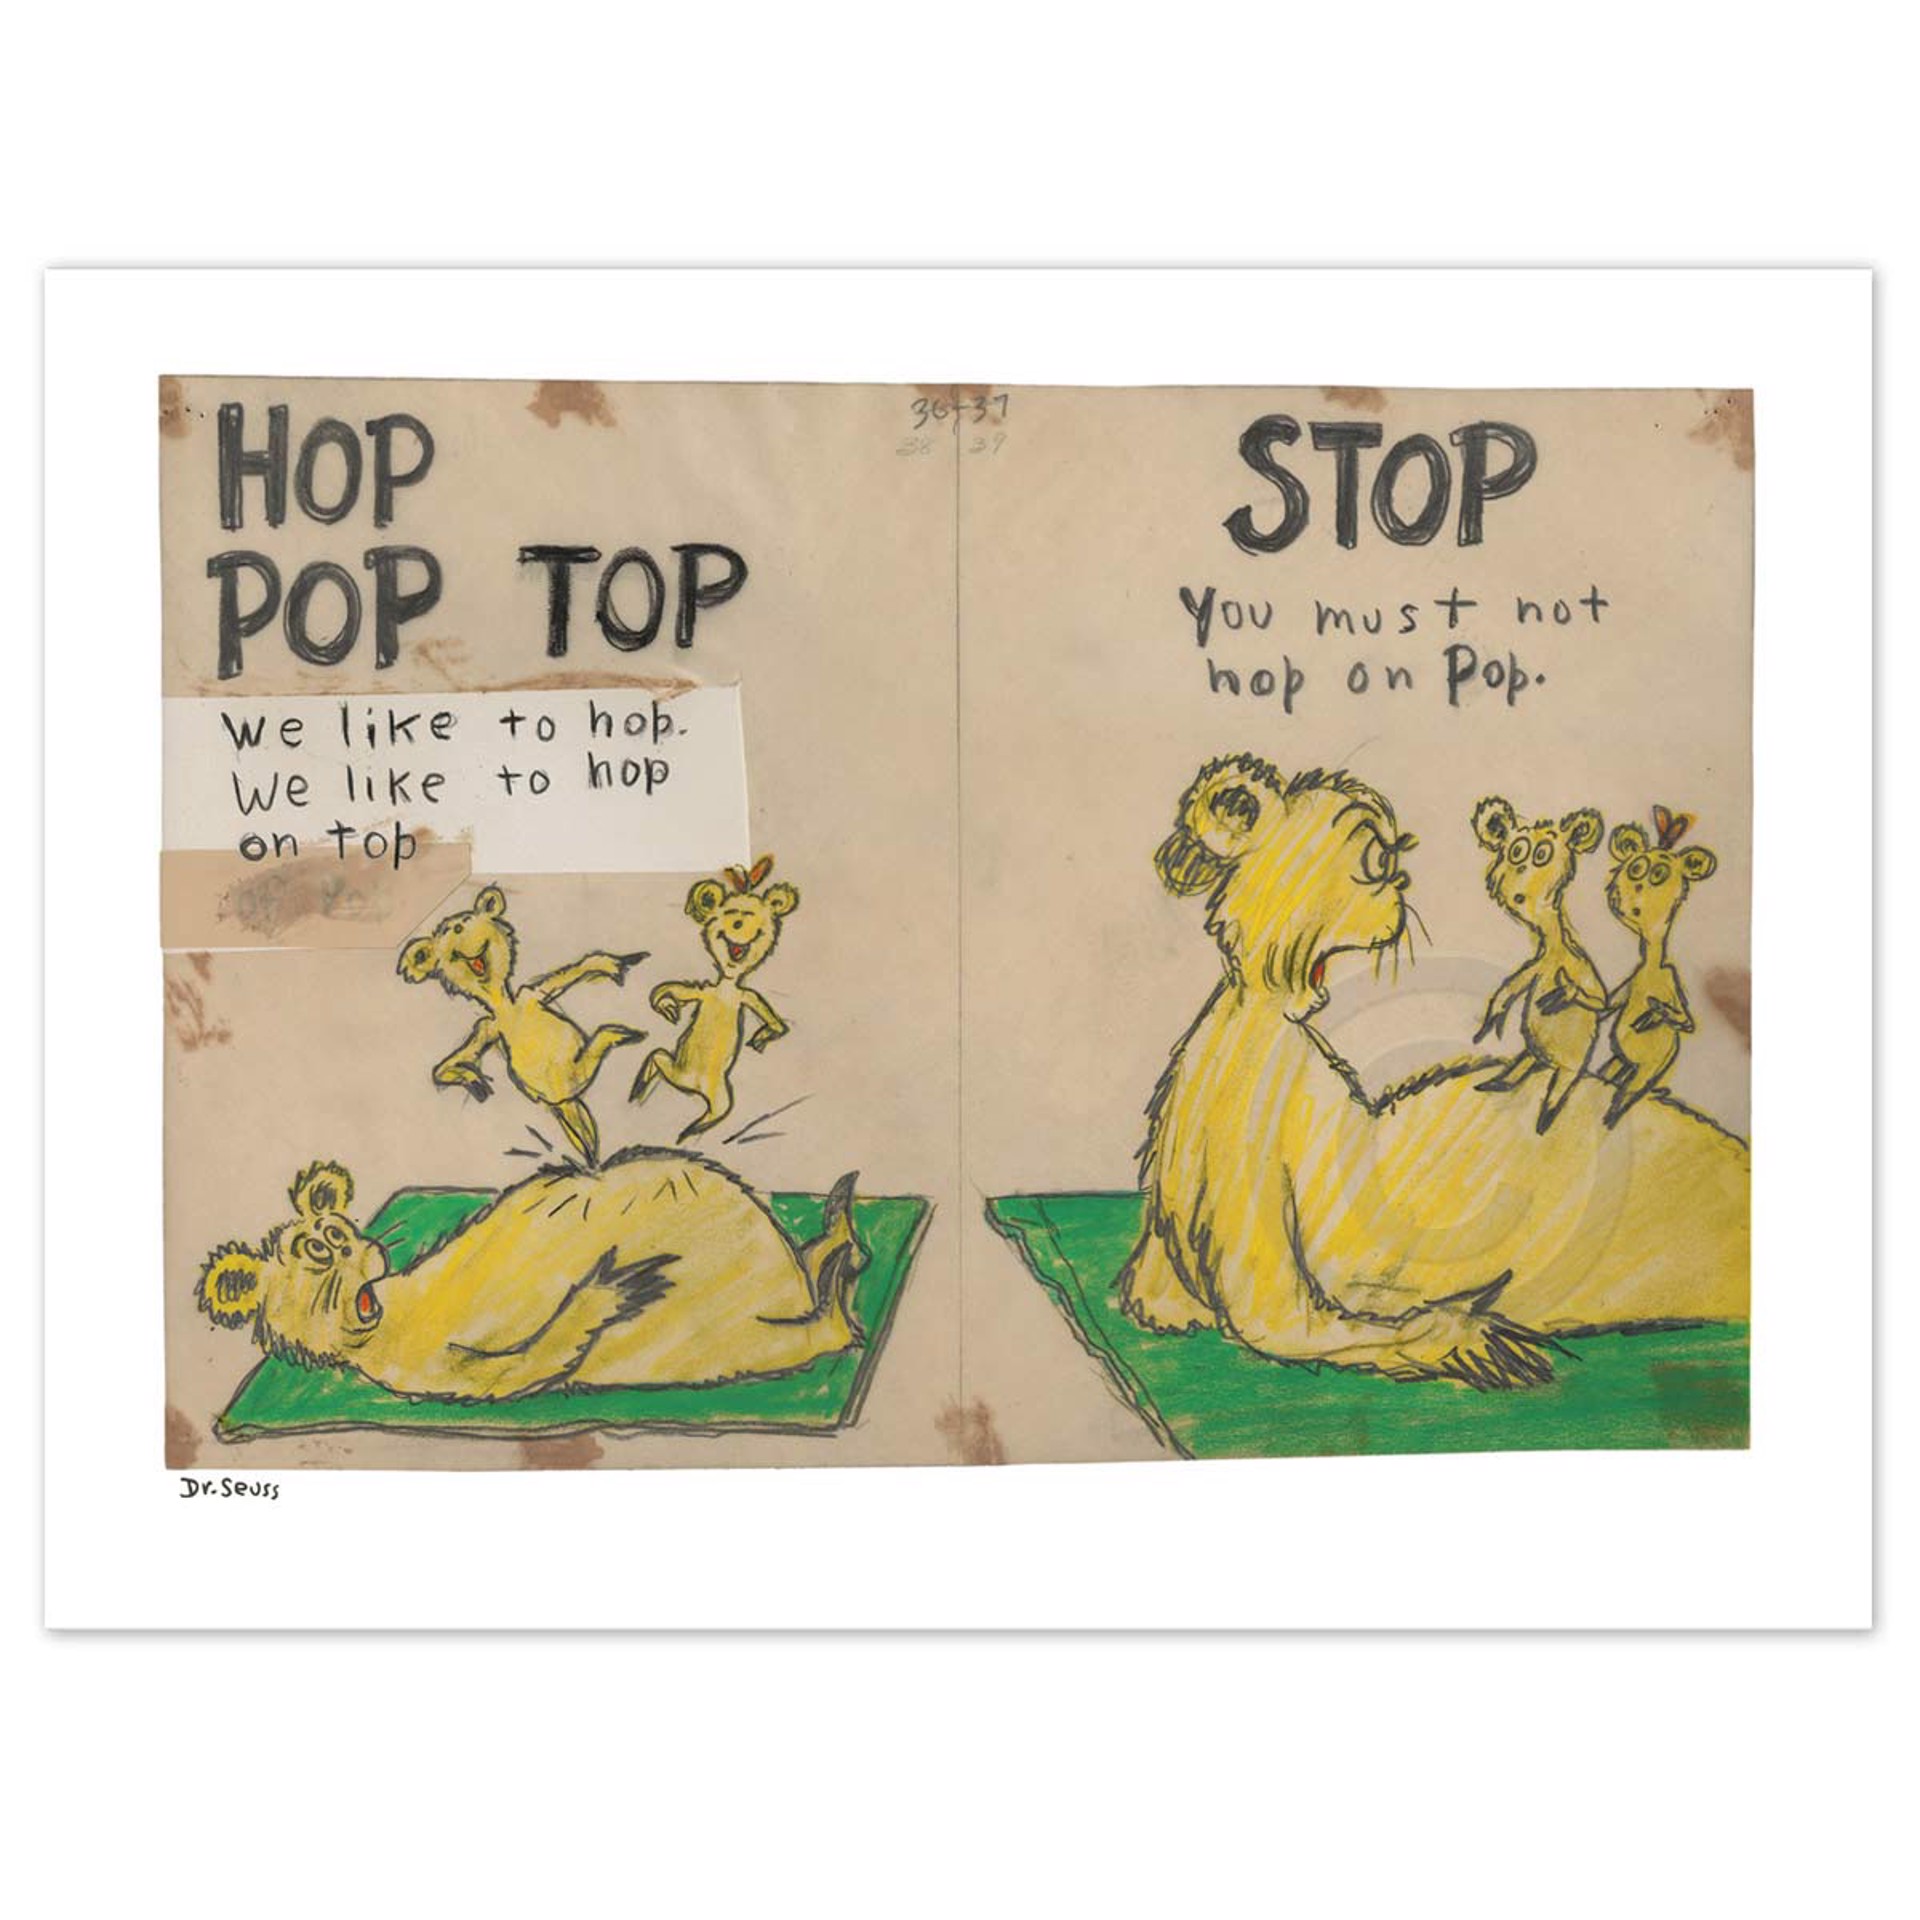 Hop Pop Top (Diptych) by Dr. Seuss